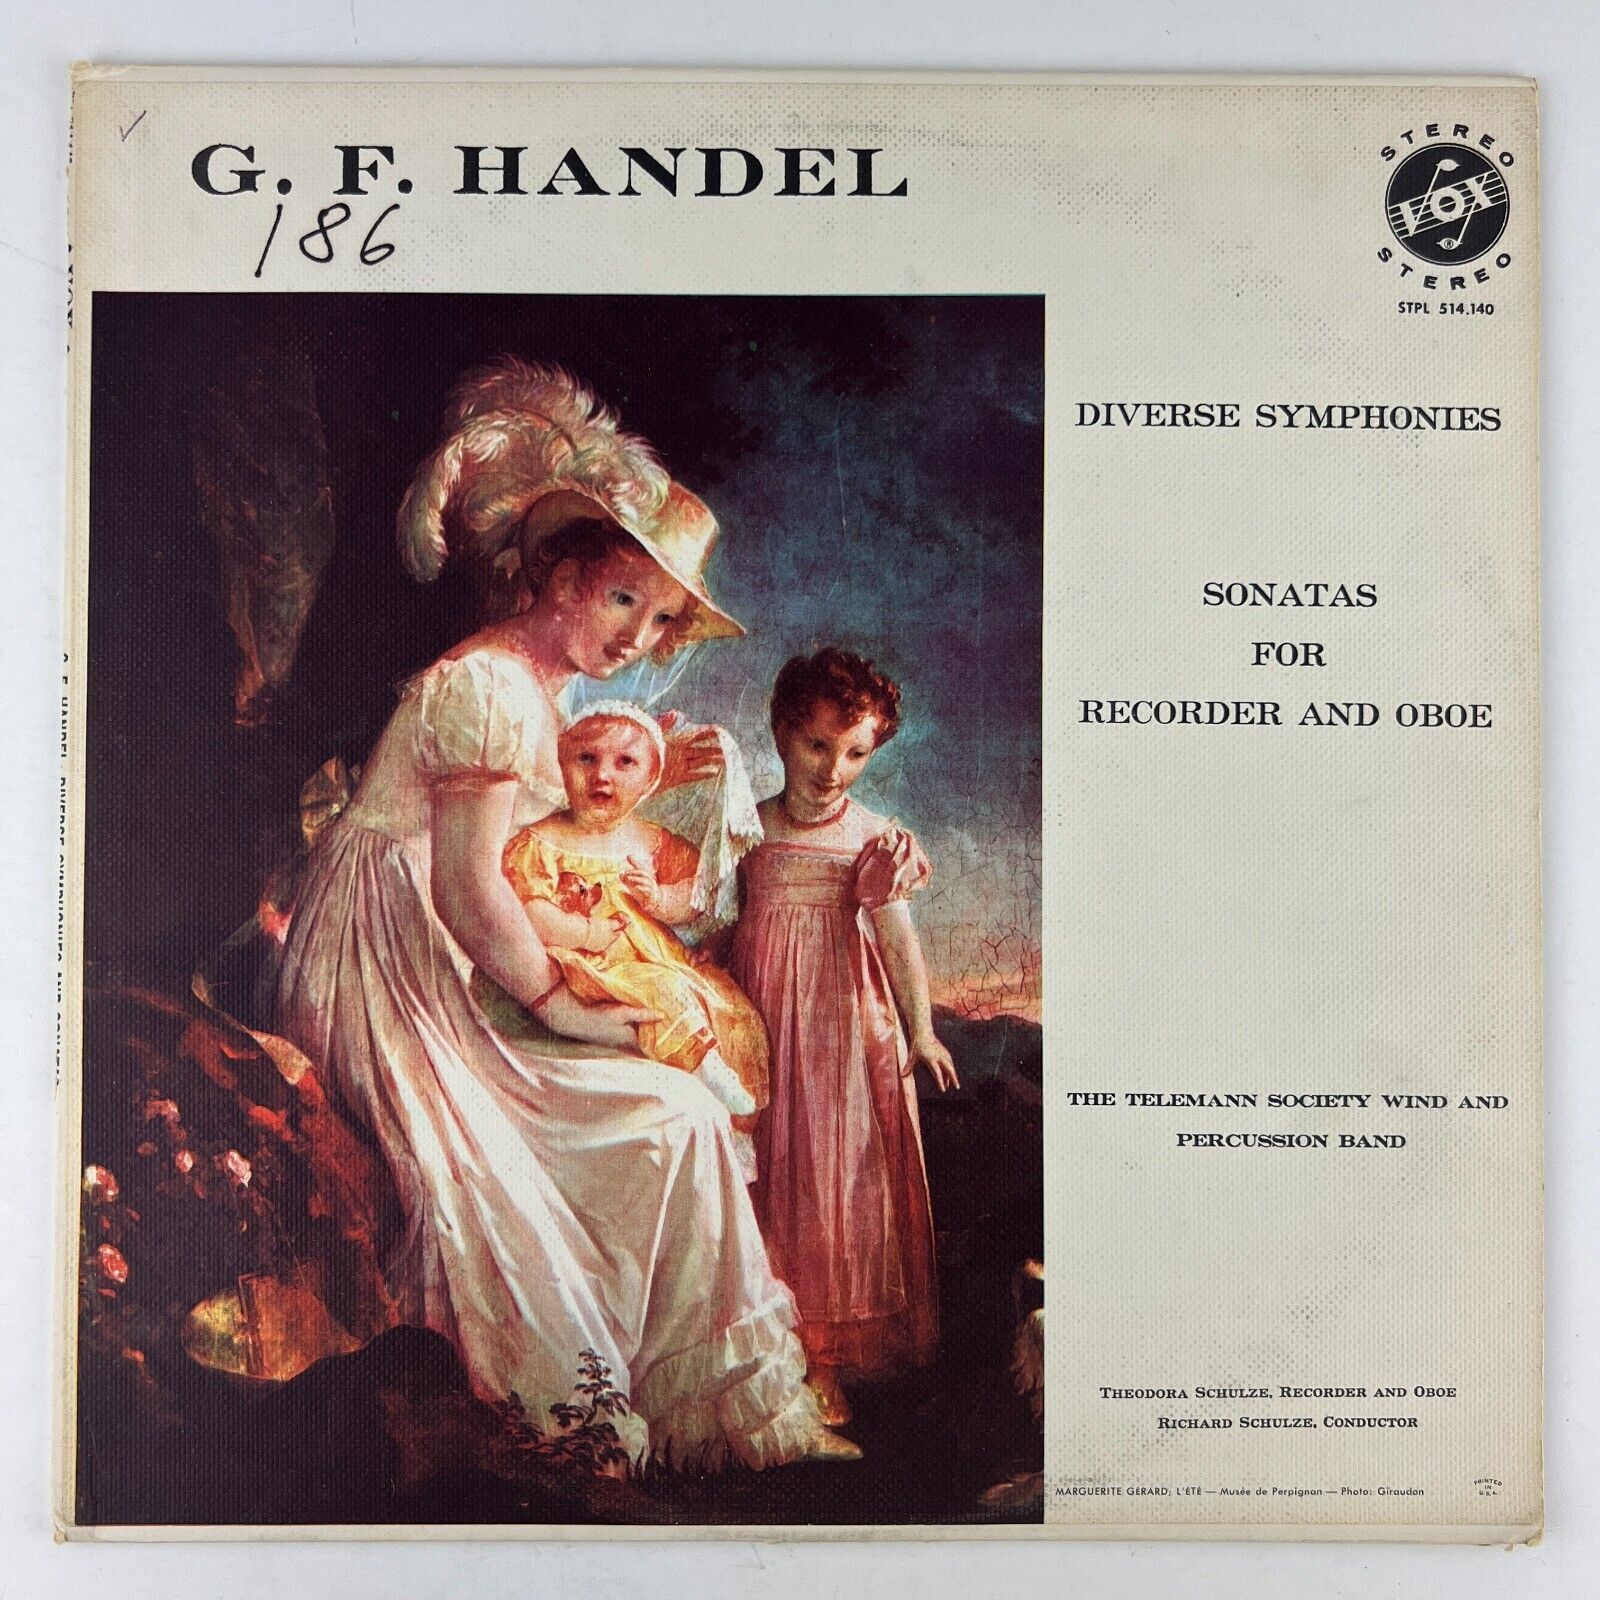 Primary image for G. F. Handel Diverse Symphonies And Sonatas Vinyl LP Record Album STPL 514.140